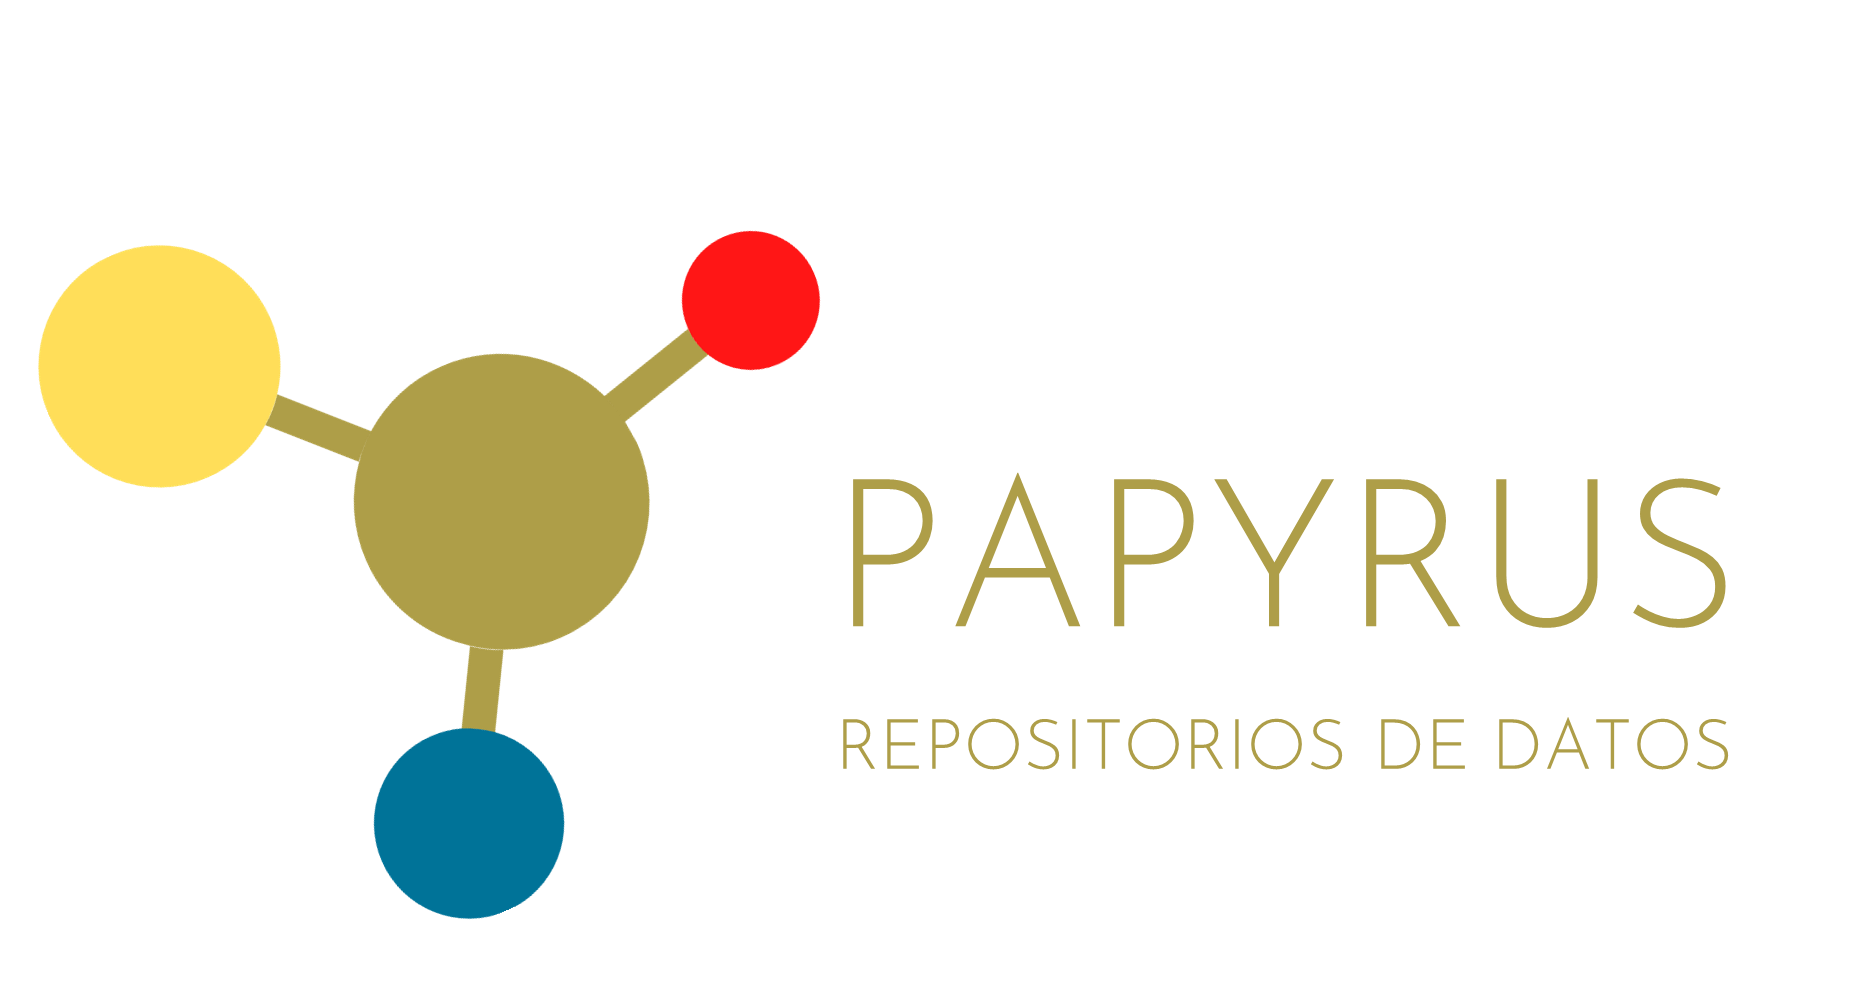 Papyrus logo2